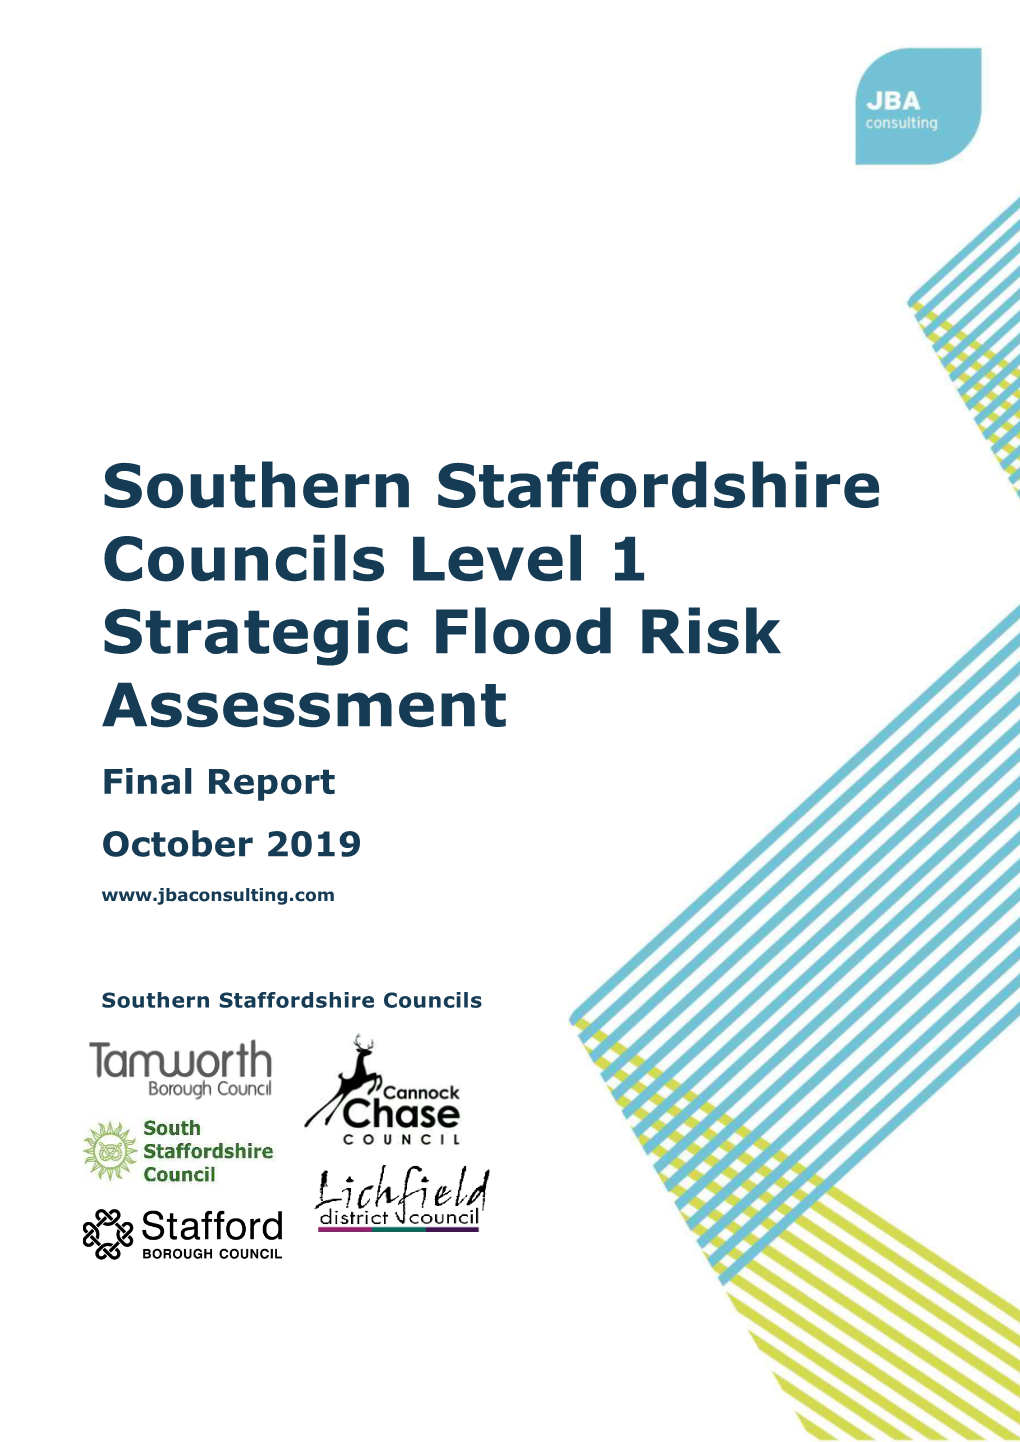 Southern Staffordshire Councils Level 1 Strategic Flood Risk Assessment Final Report October 2019